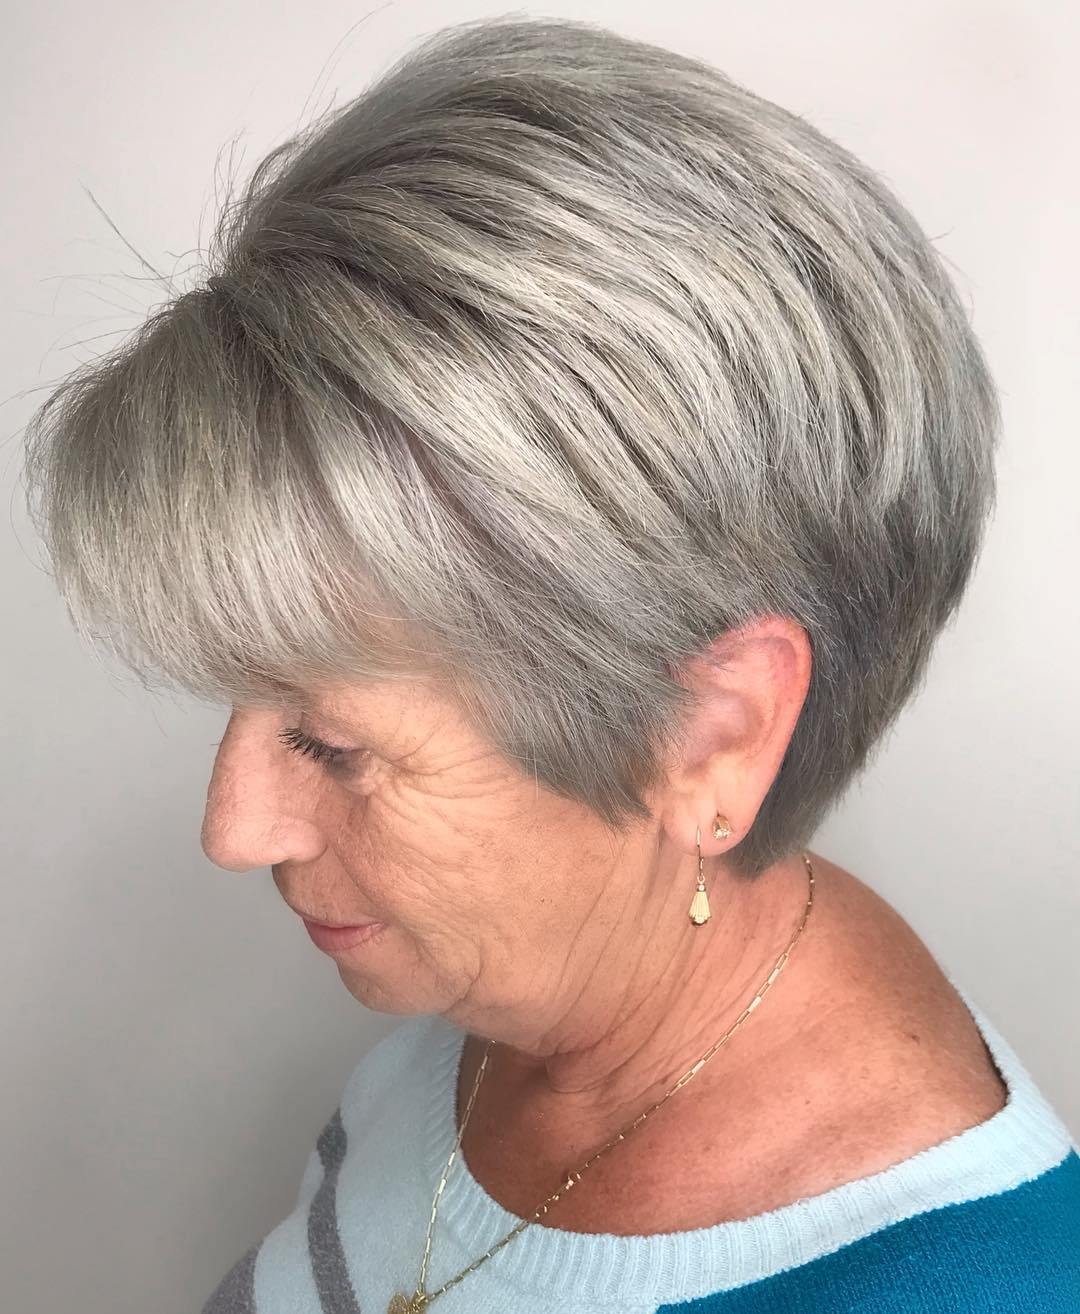 35 gray hair styles to get instagram-worthy looks in 2019